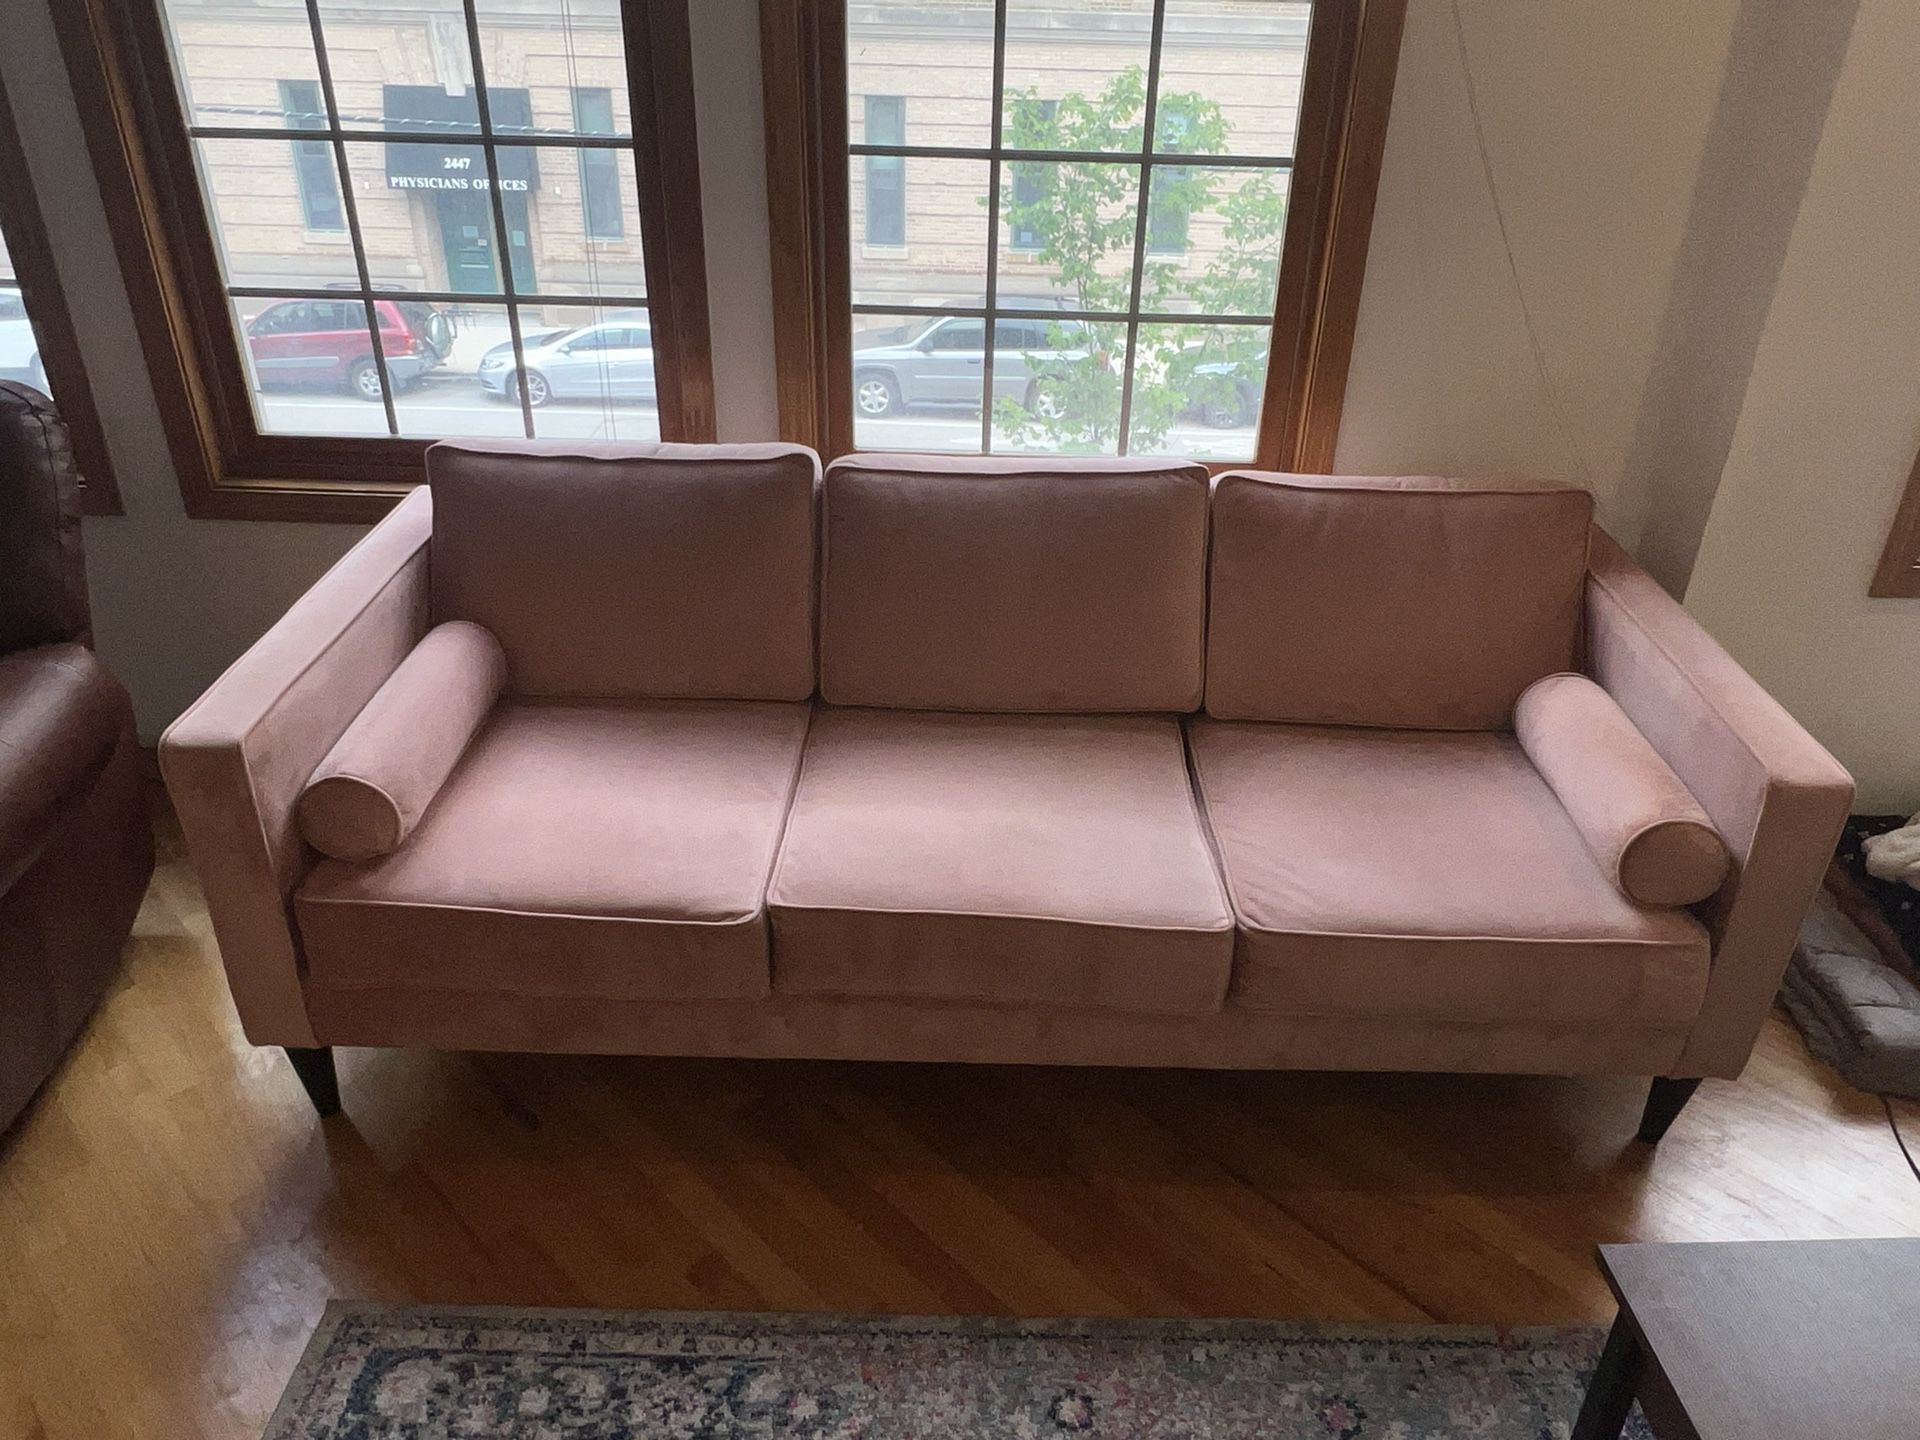 Comfortable Pink Velvet Sofa